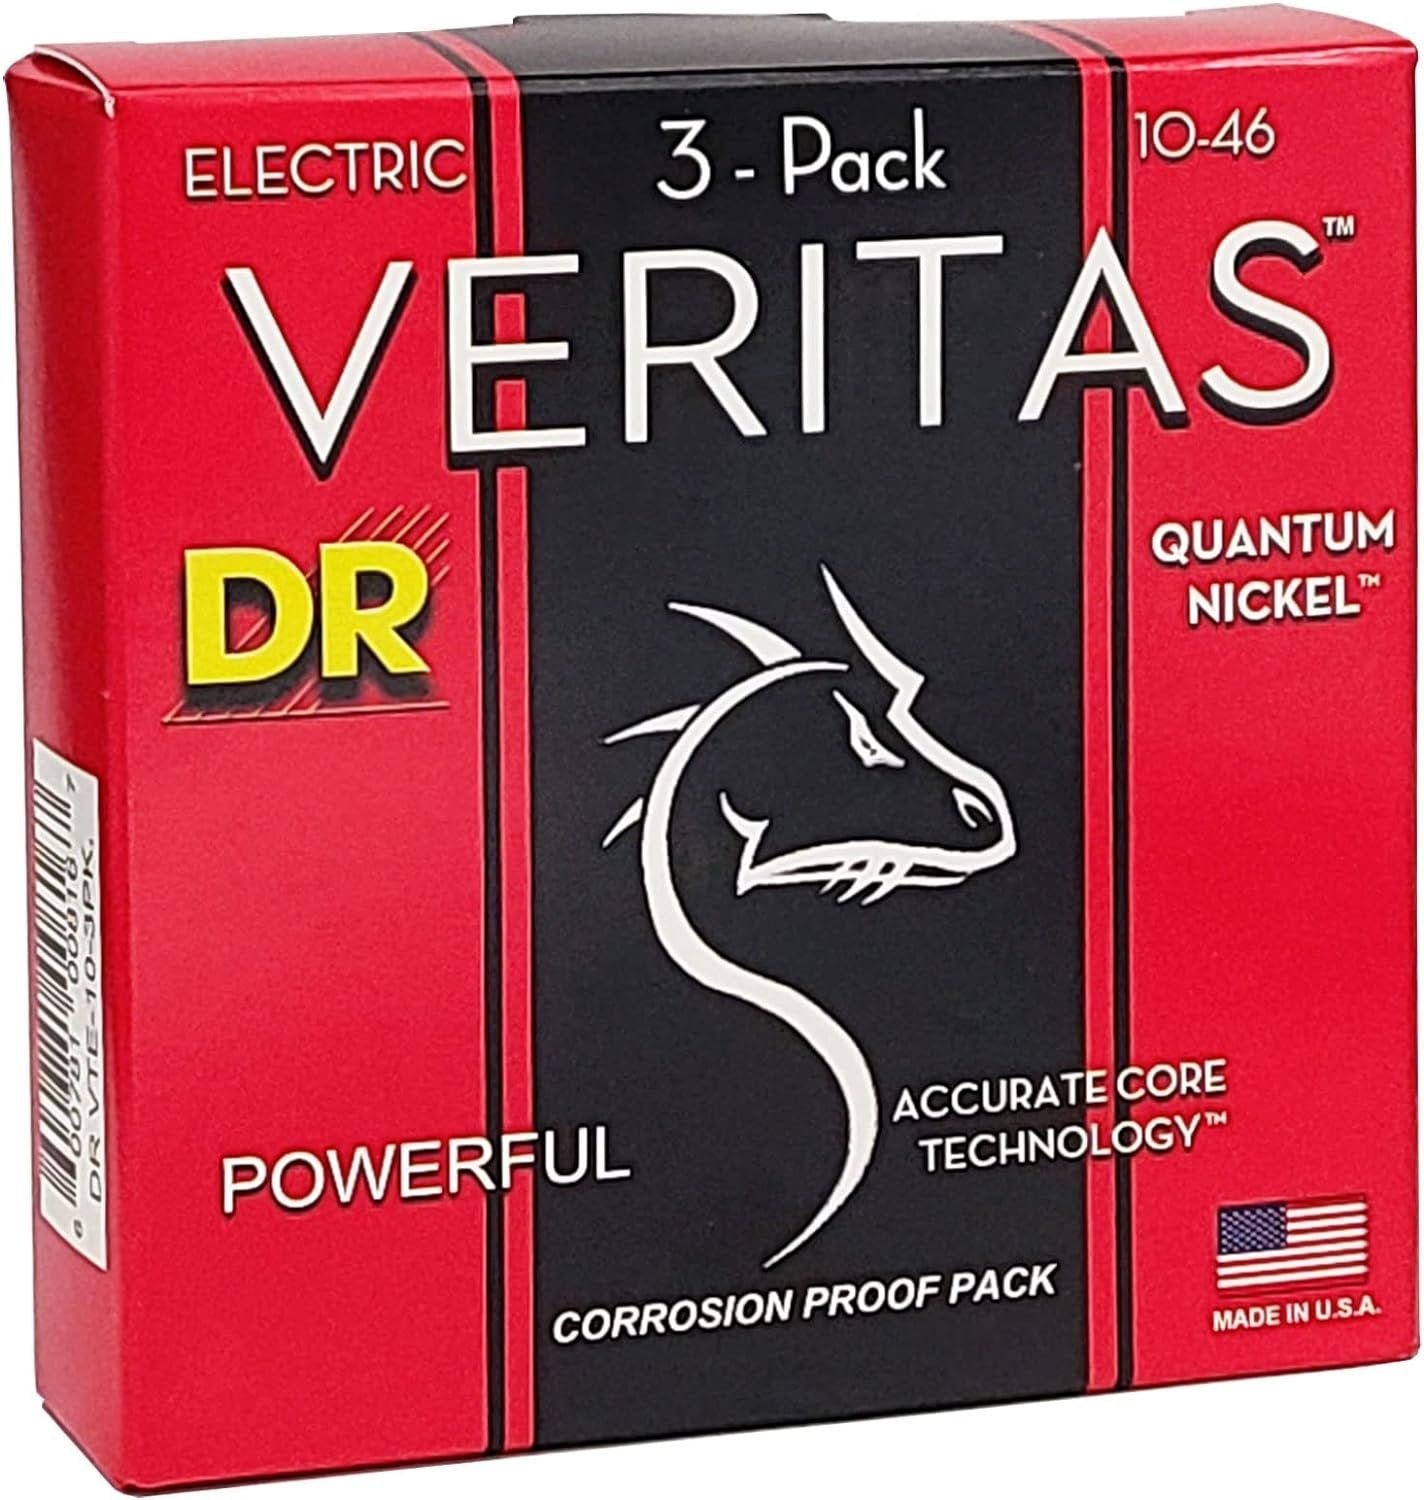 DR Strings VTE-10-3PK Veritas Coated Core Technology Electric Guitar Strings, Medium 10-46, 3-Pack